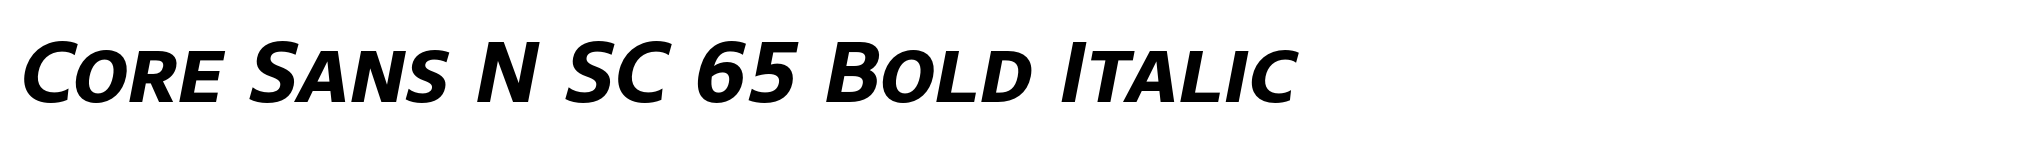 Core Sans N SC 65 Bold Italic image